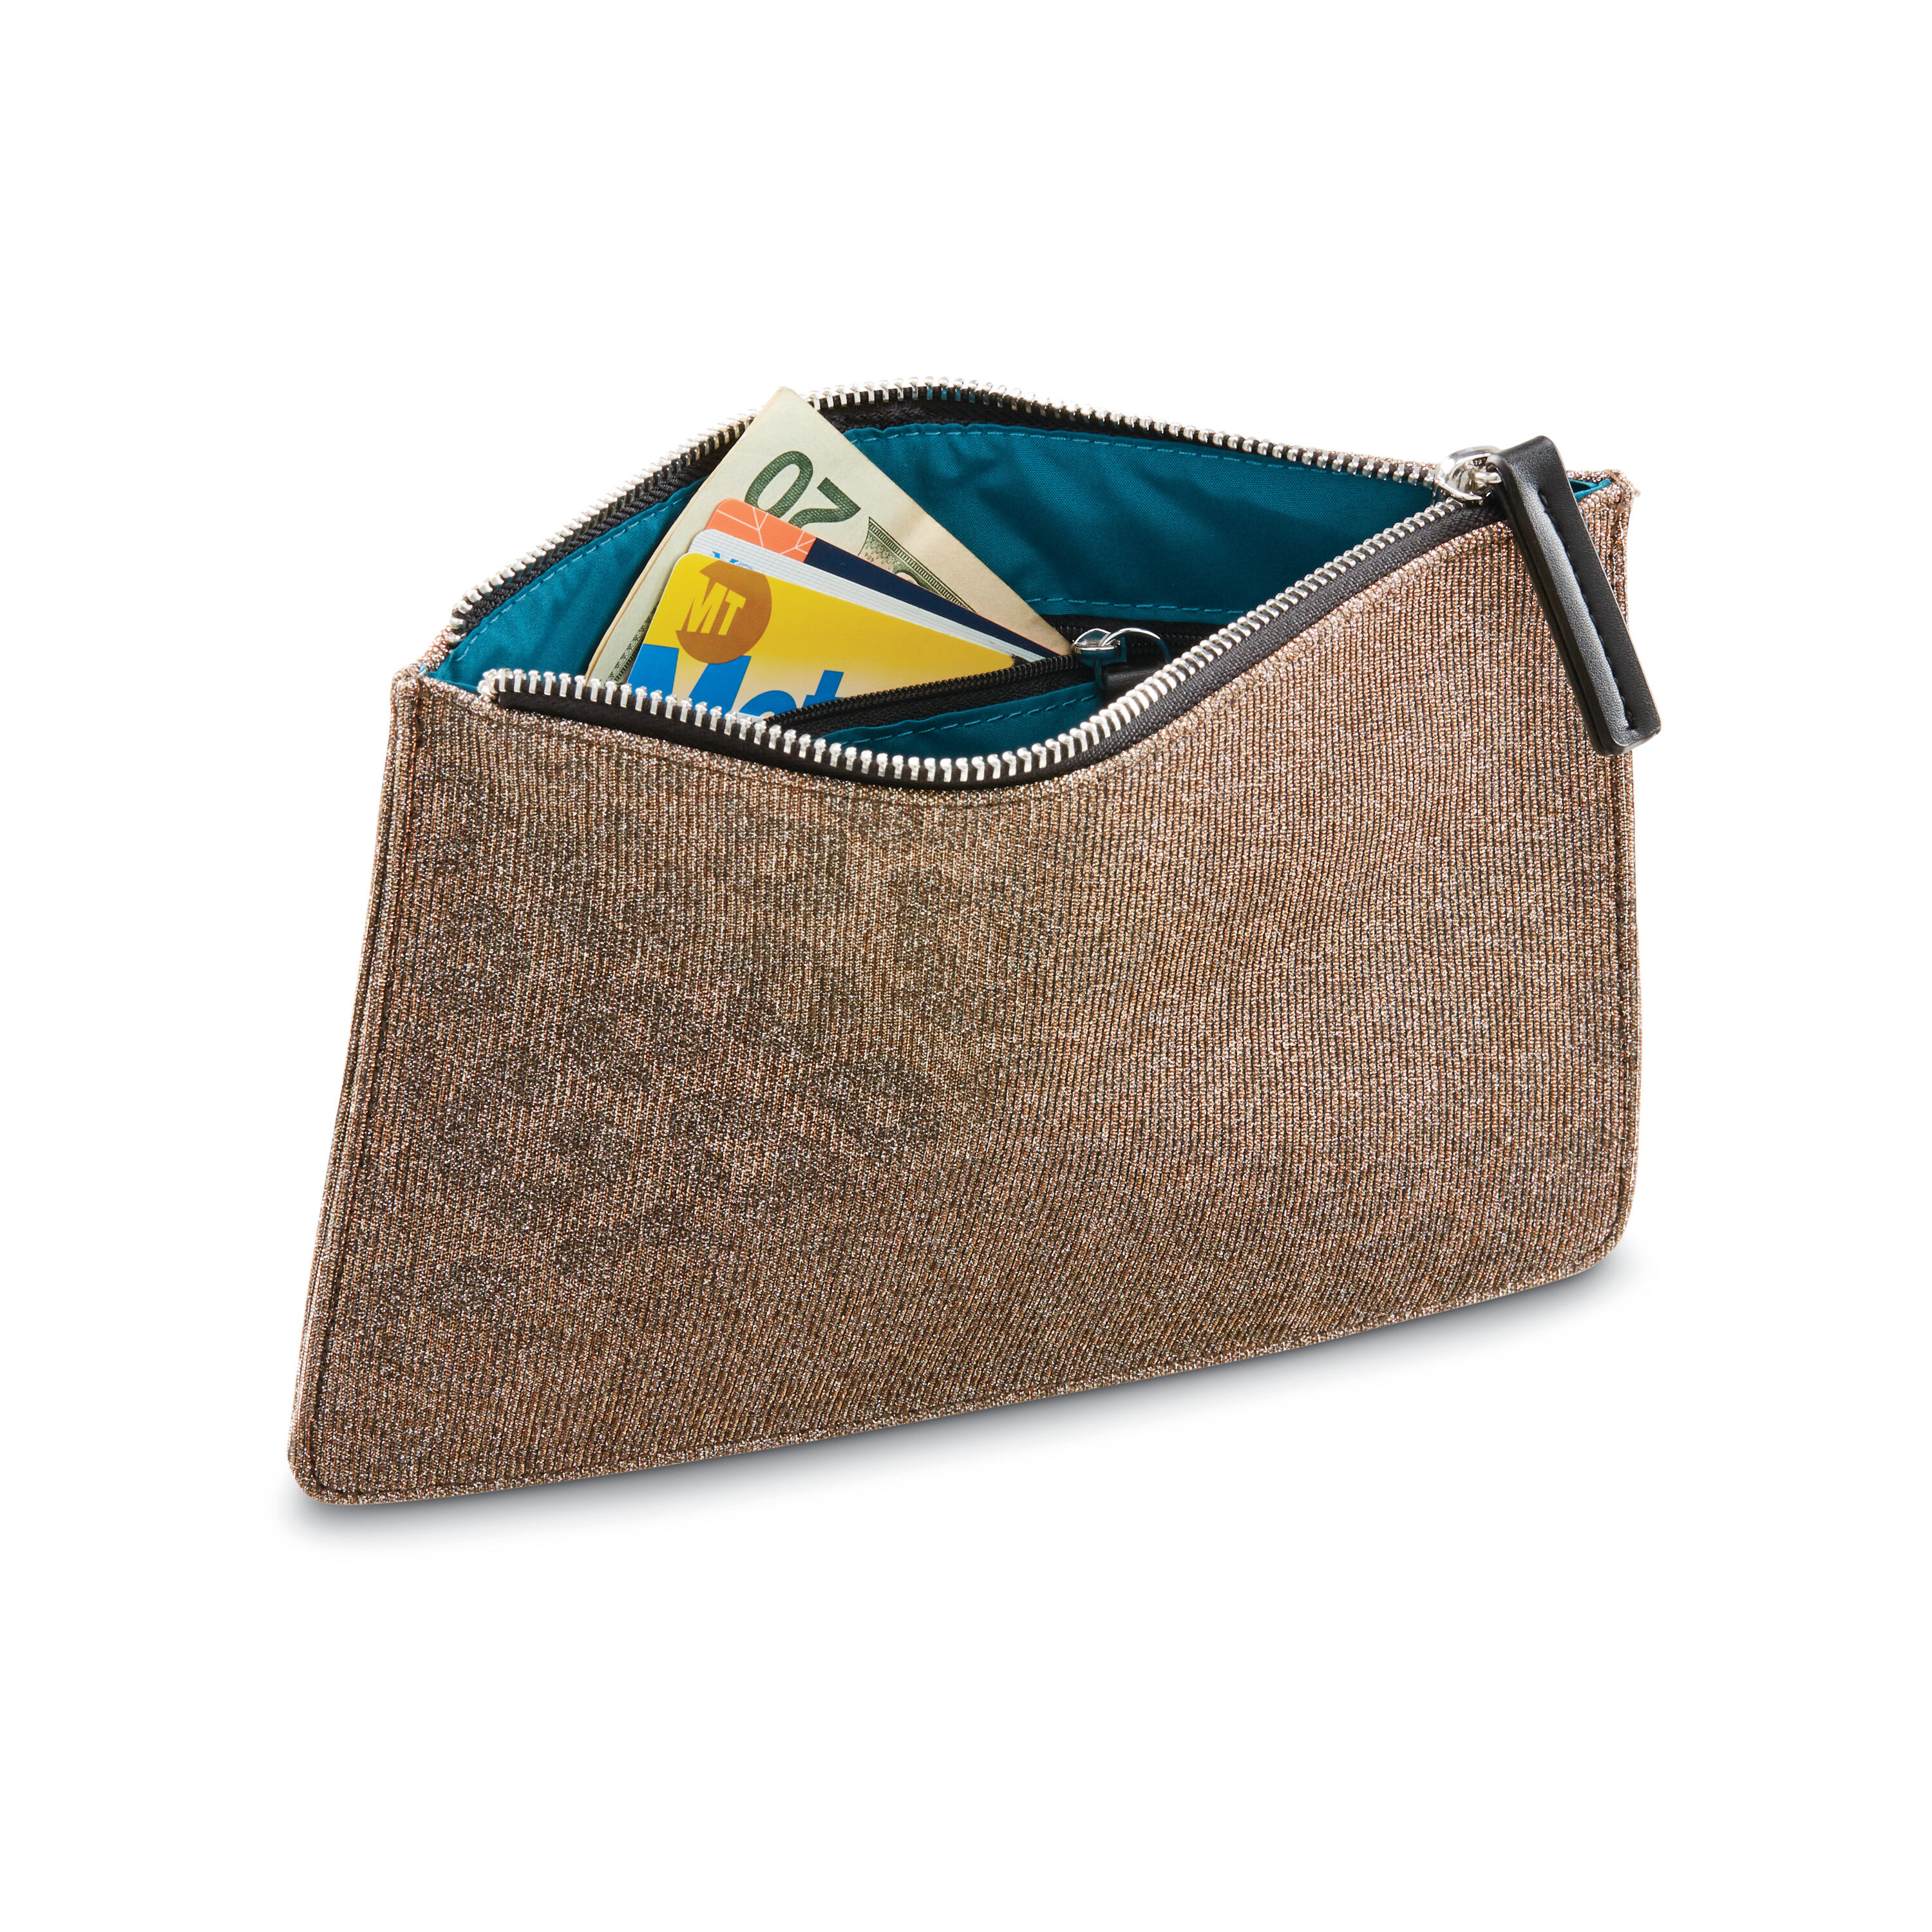 Buy Samsonite Laptop Backpack Office Bag | Travel Backpack For Men Women |  Office Laptop Bag | Ikonn Eco III Polyester, Free Size, Black Online